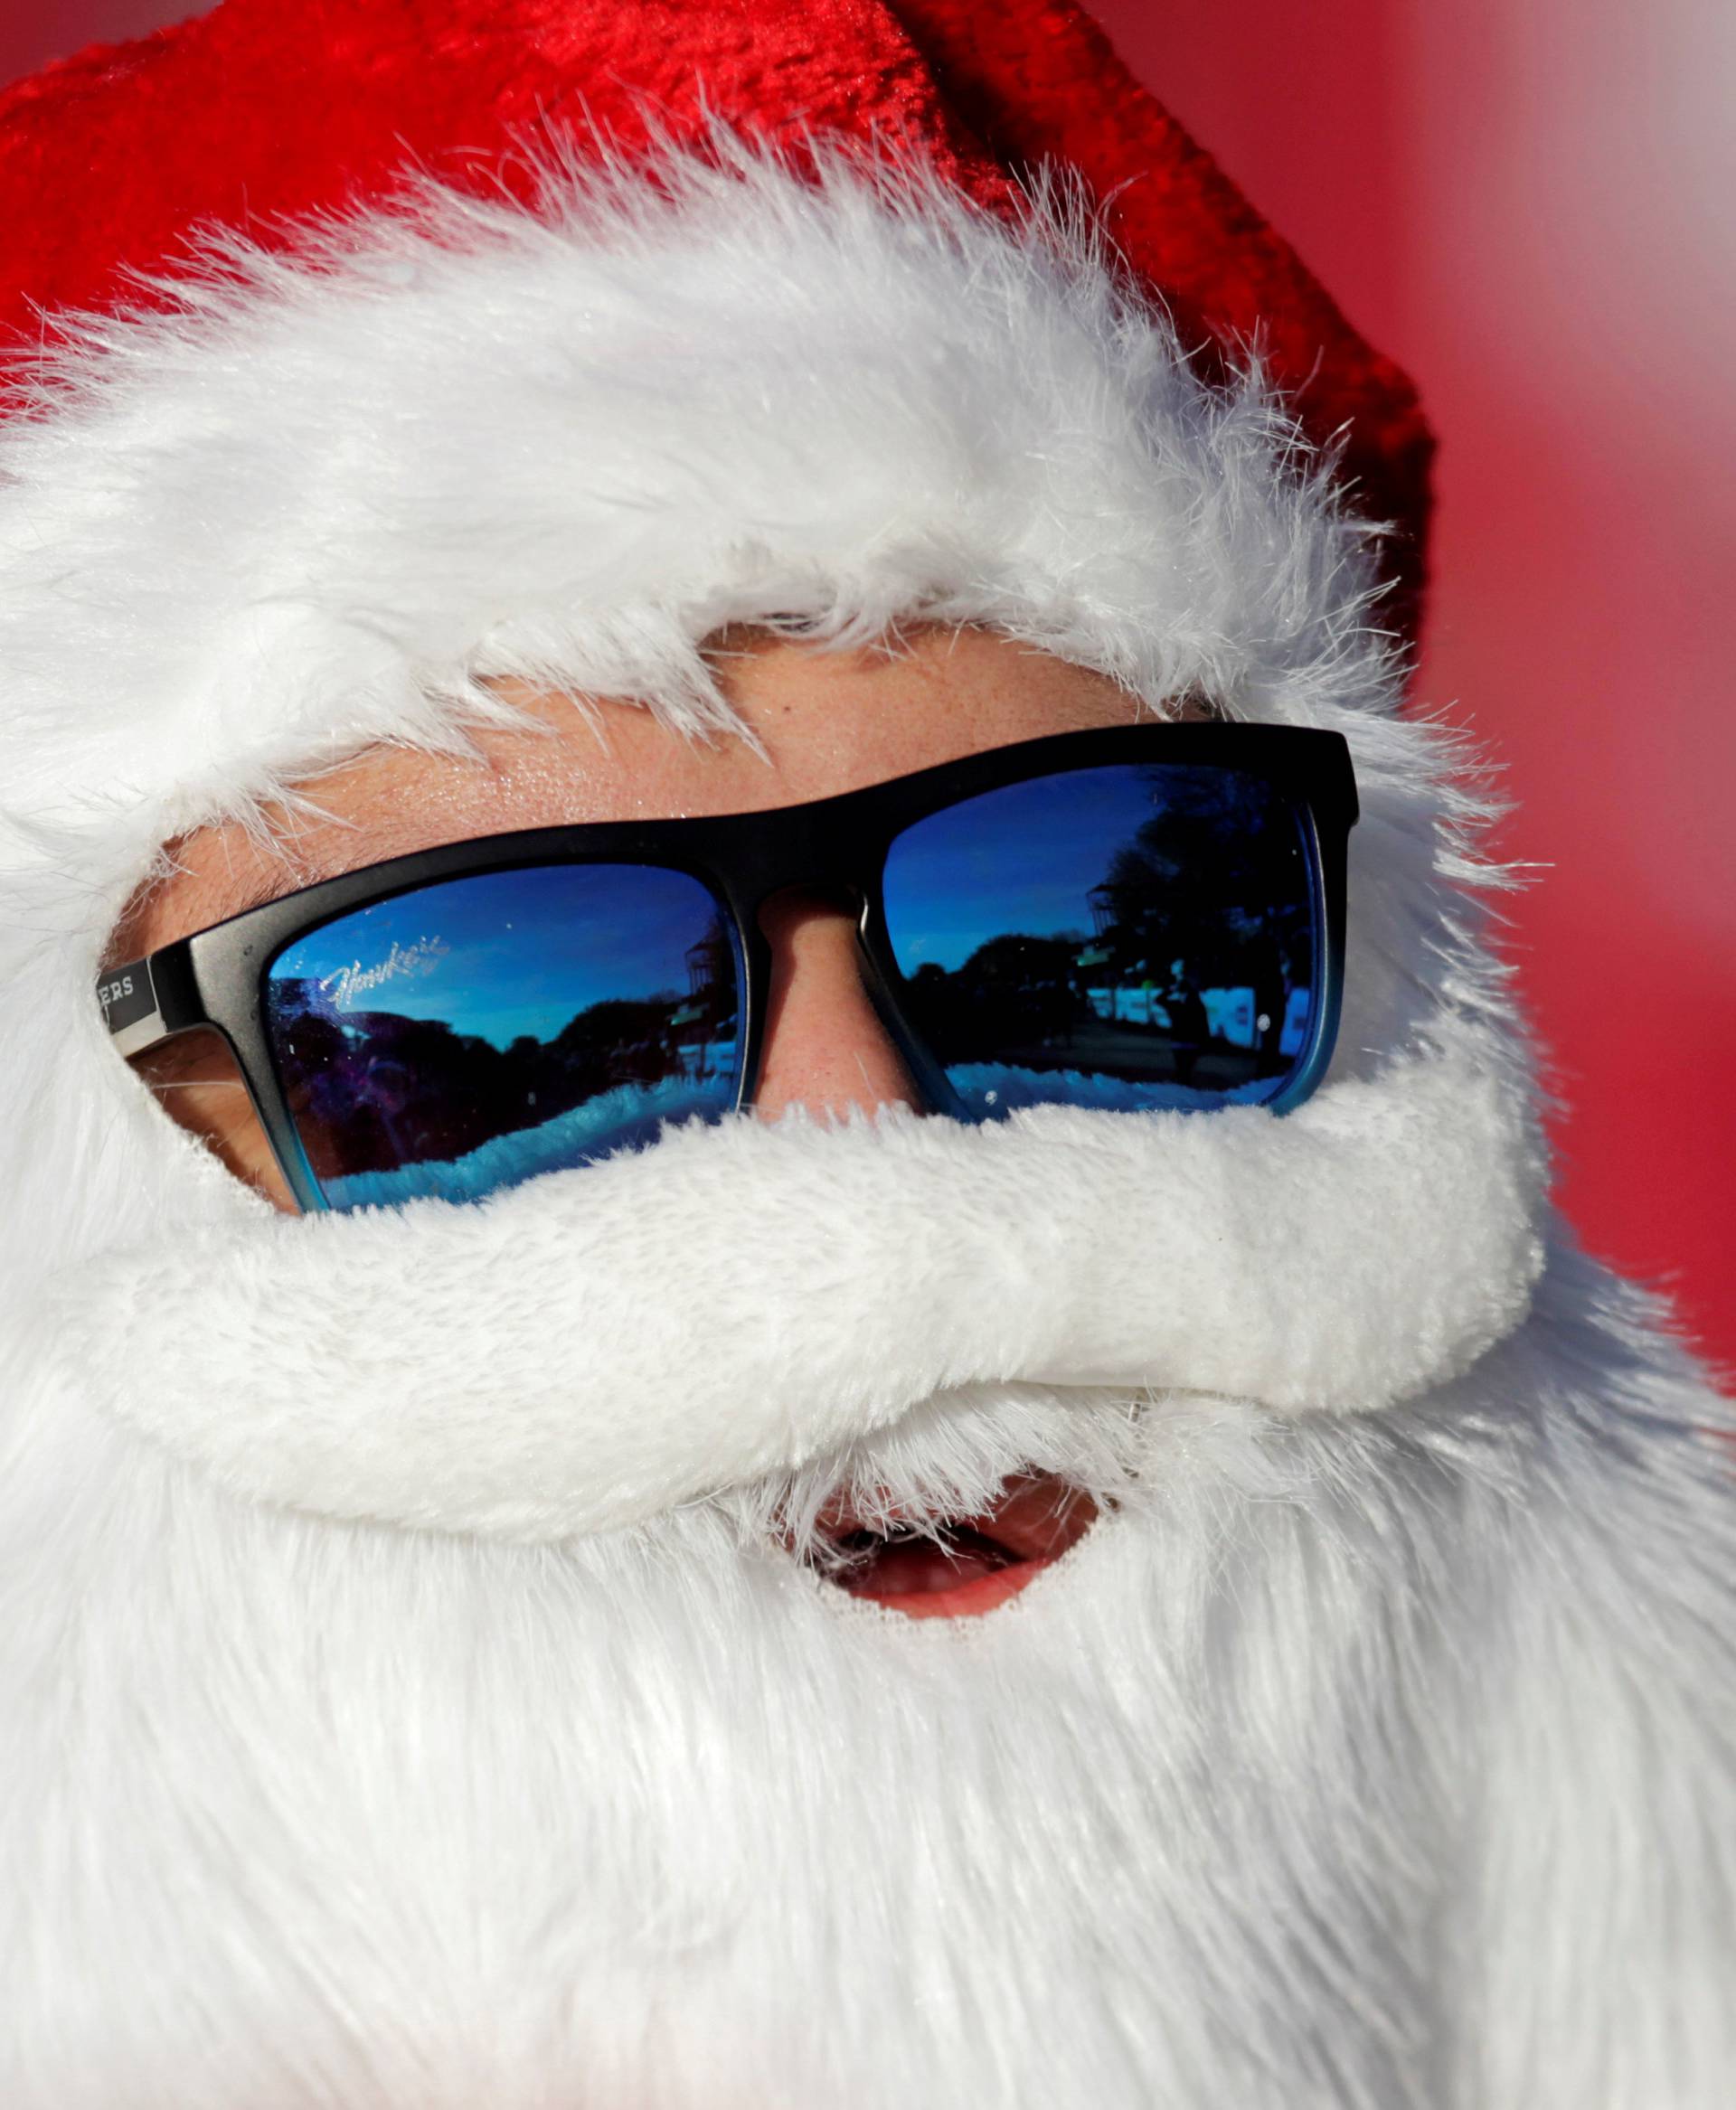 A man dressed as Santa Claus takes part in the annual race known as "Run Santa Run" at Fundidora Park in Monterrey